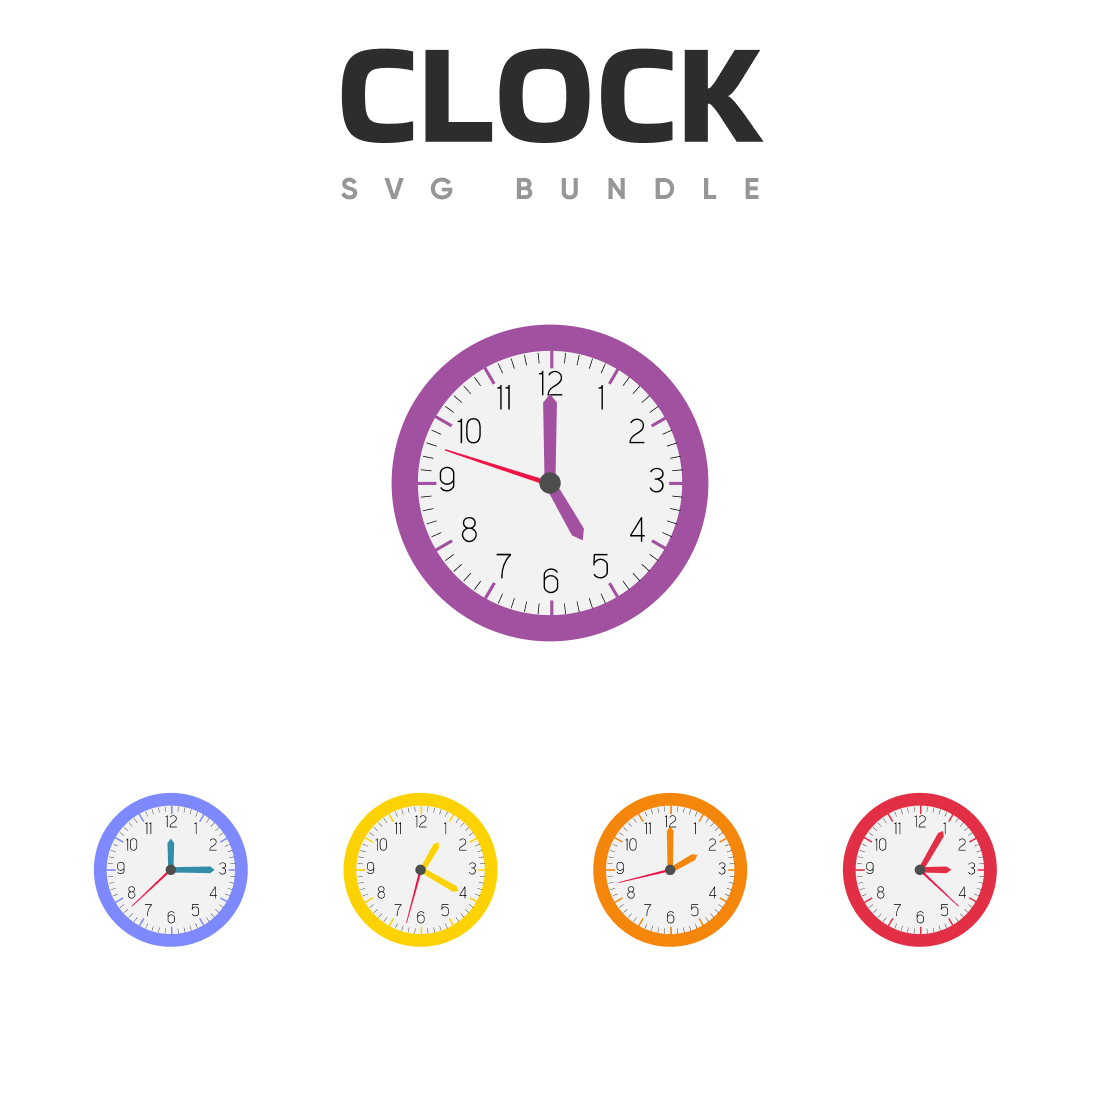 Clock svg bundle.